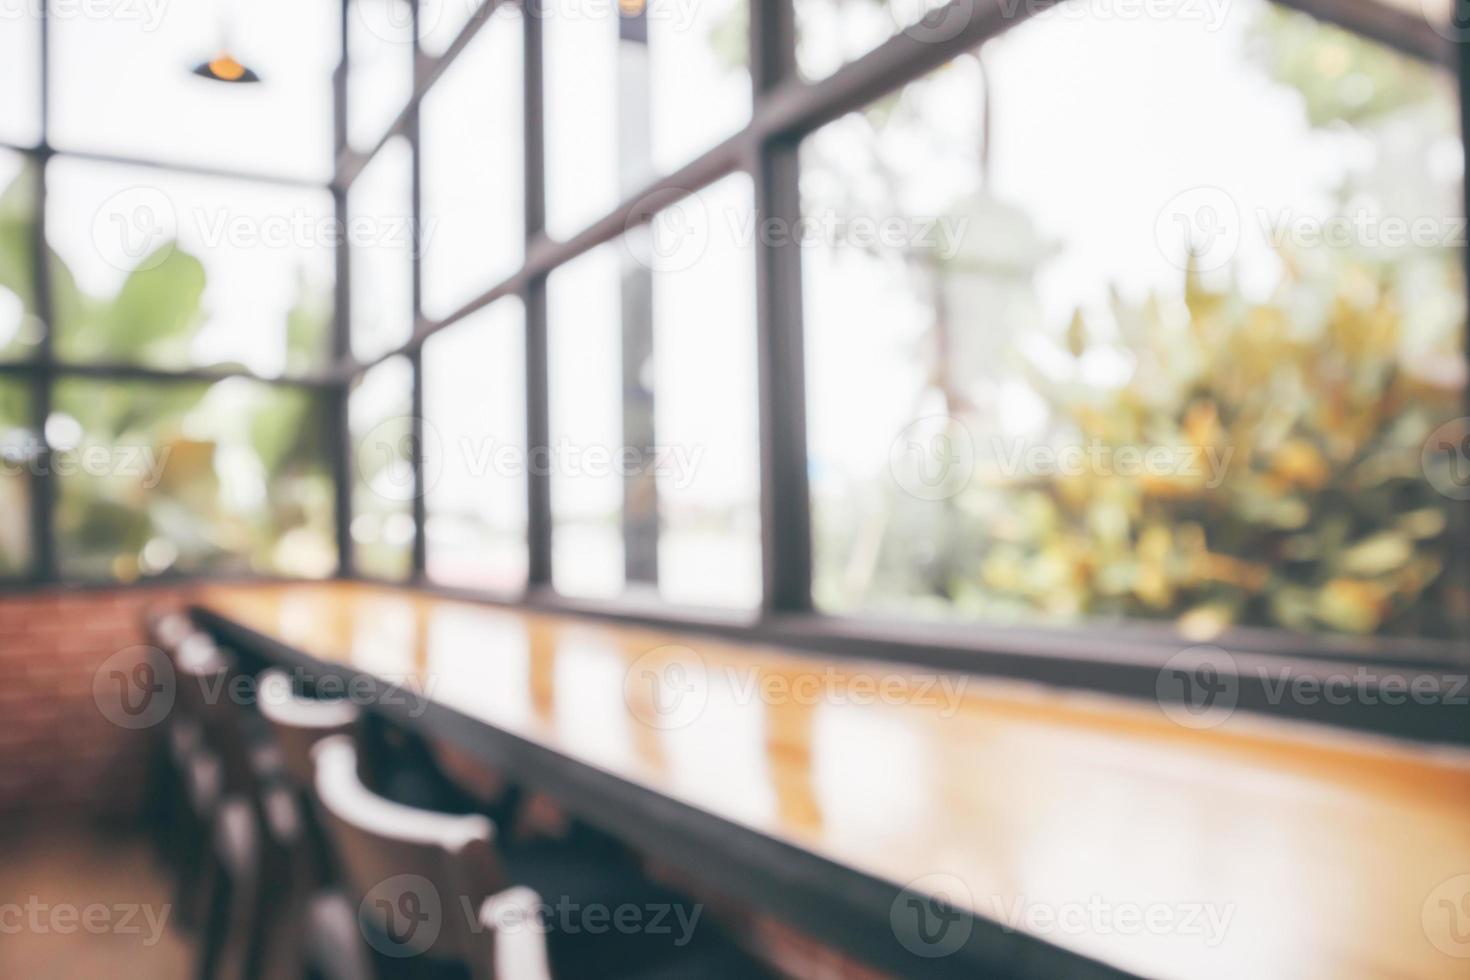 cafe koffie winkel interieur abstract vervagen onscherp met bokeh licht achtergrond foto